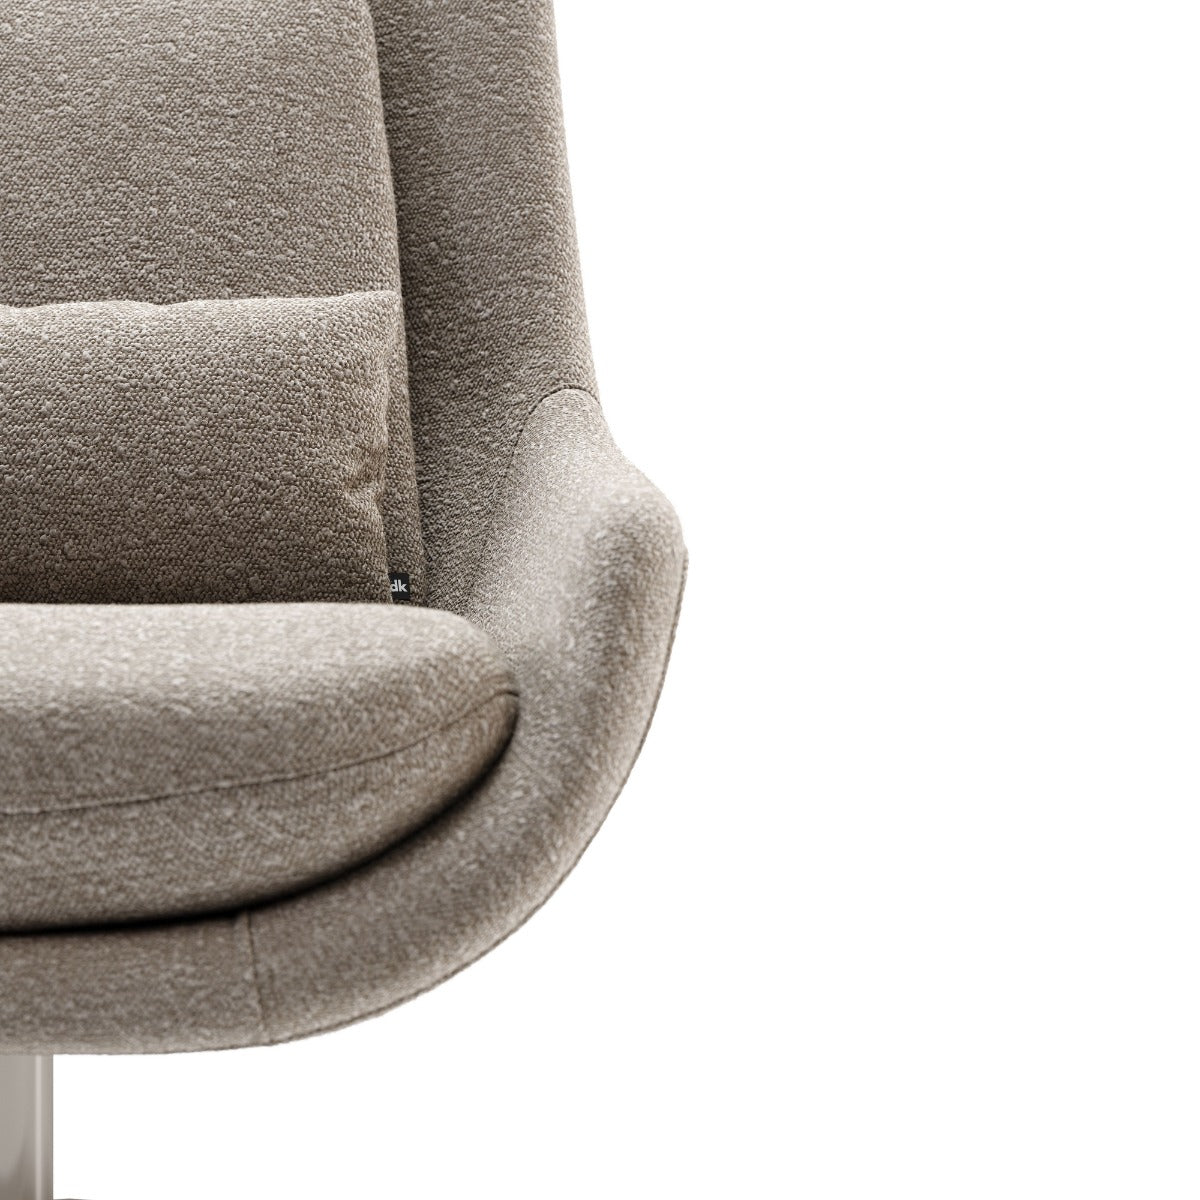 Domkapa Elba Armchair with Pillow - Customisable | Modern Furniture + Decor